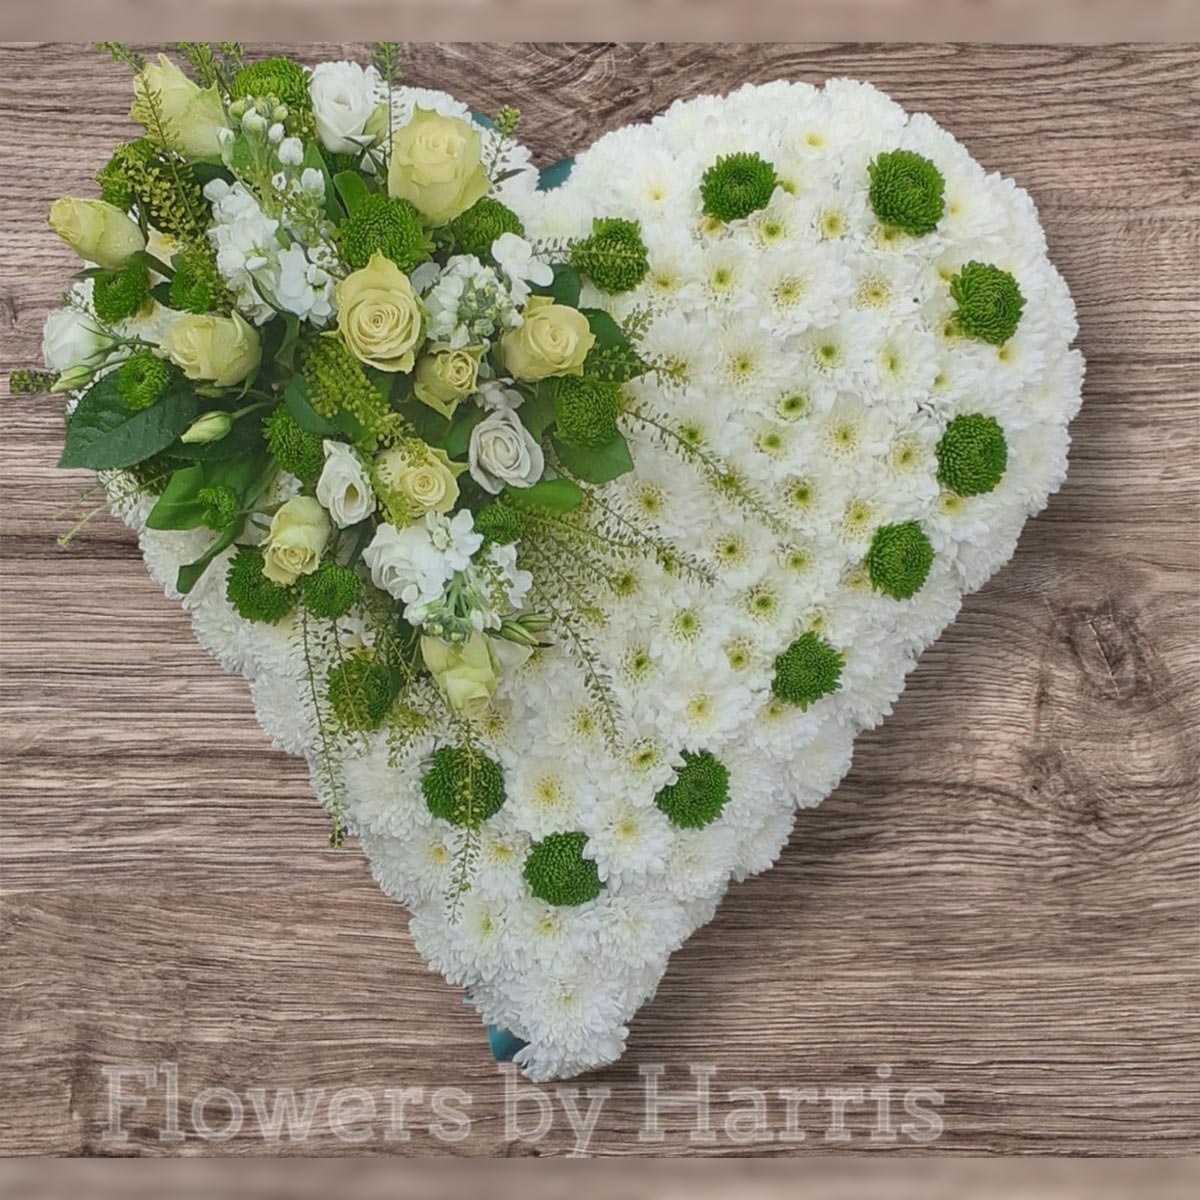 Green and White Heart Flower Arrangement